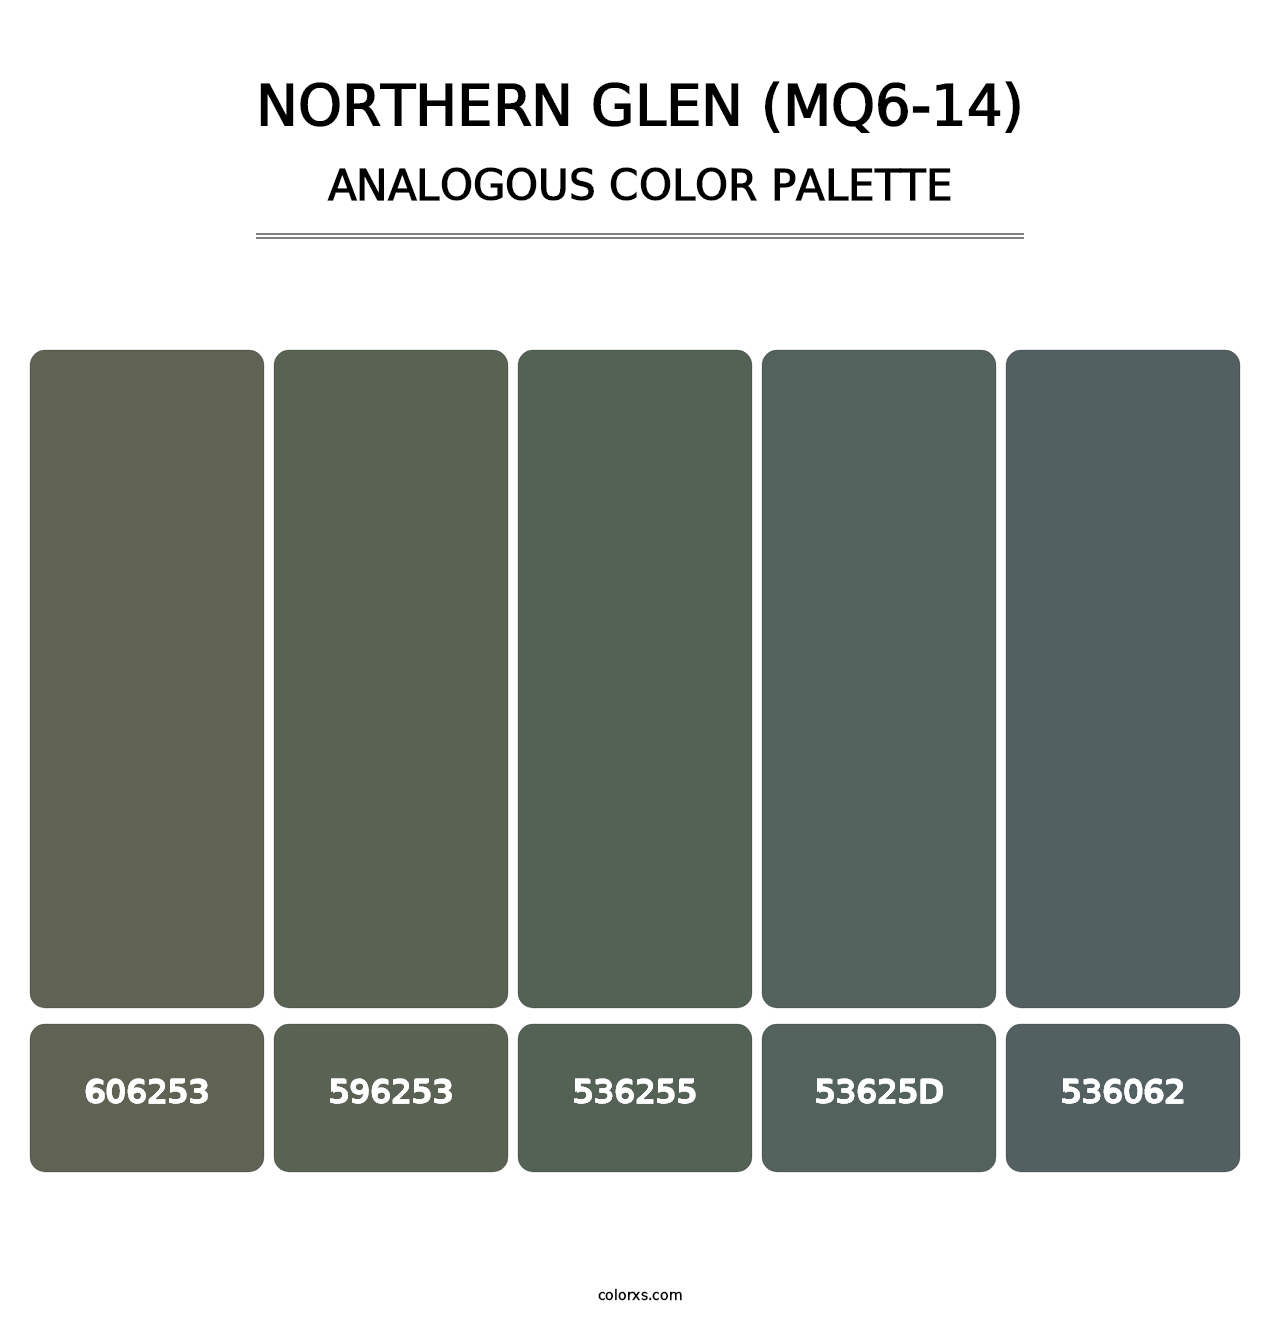 Northern Glen (MQ6-14) - Analogous Color Palette